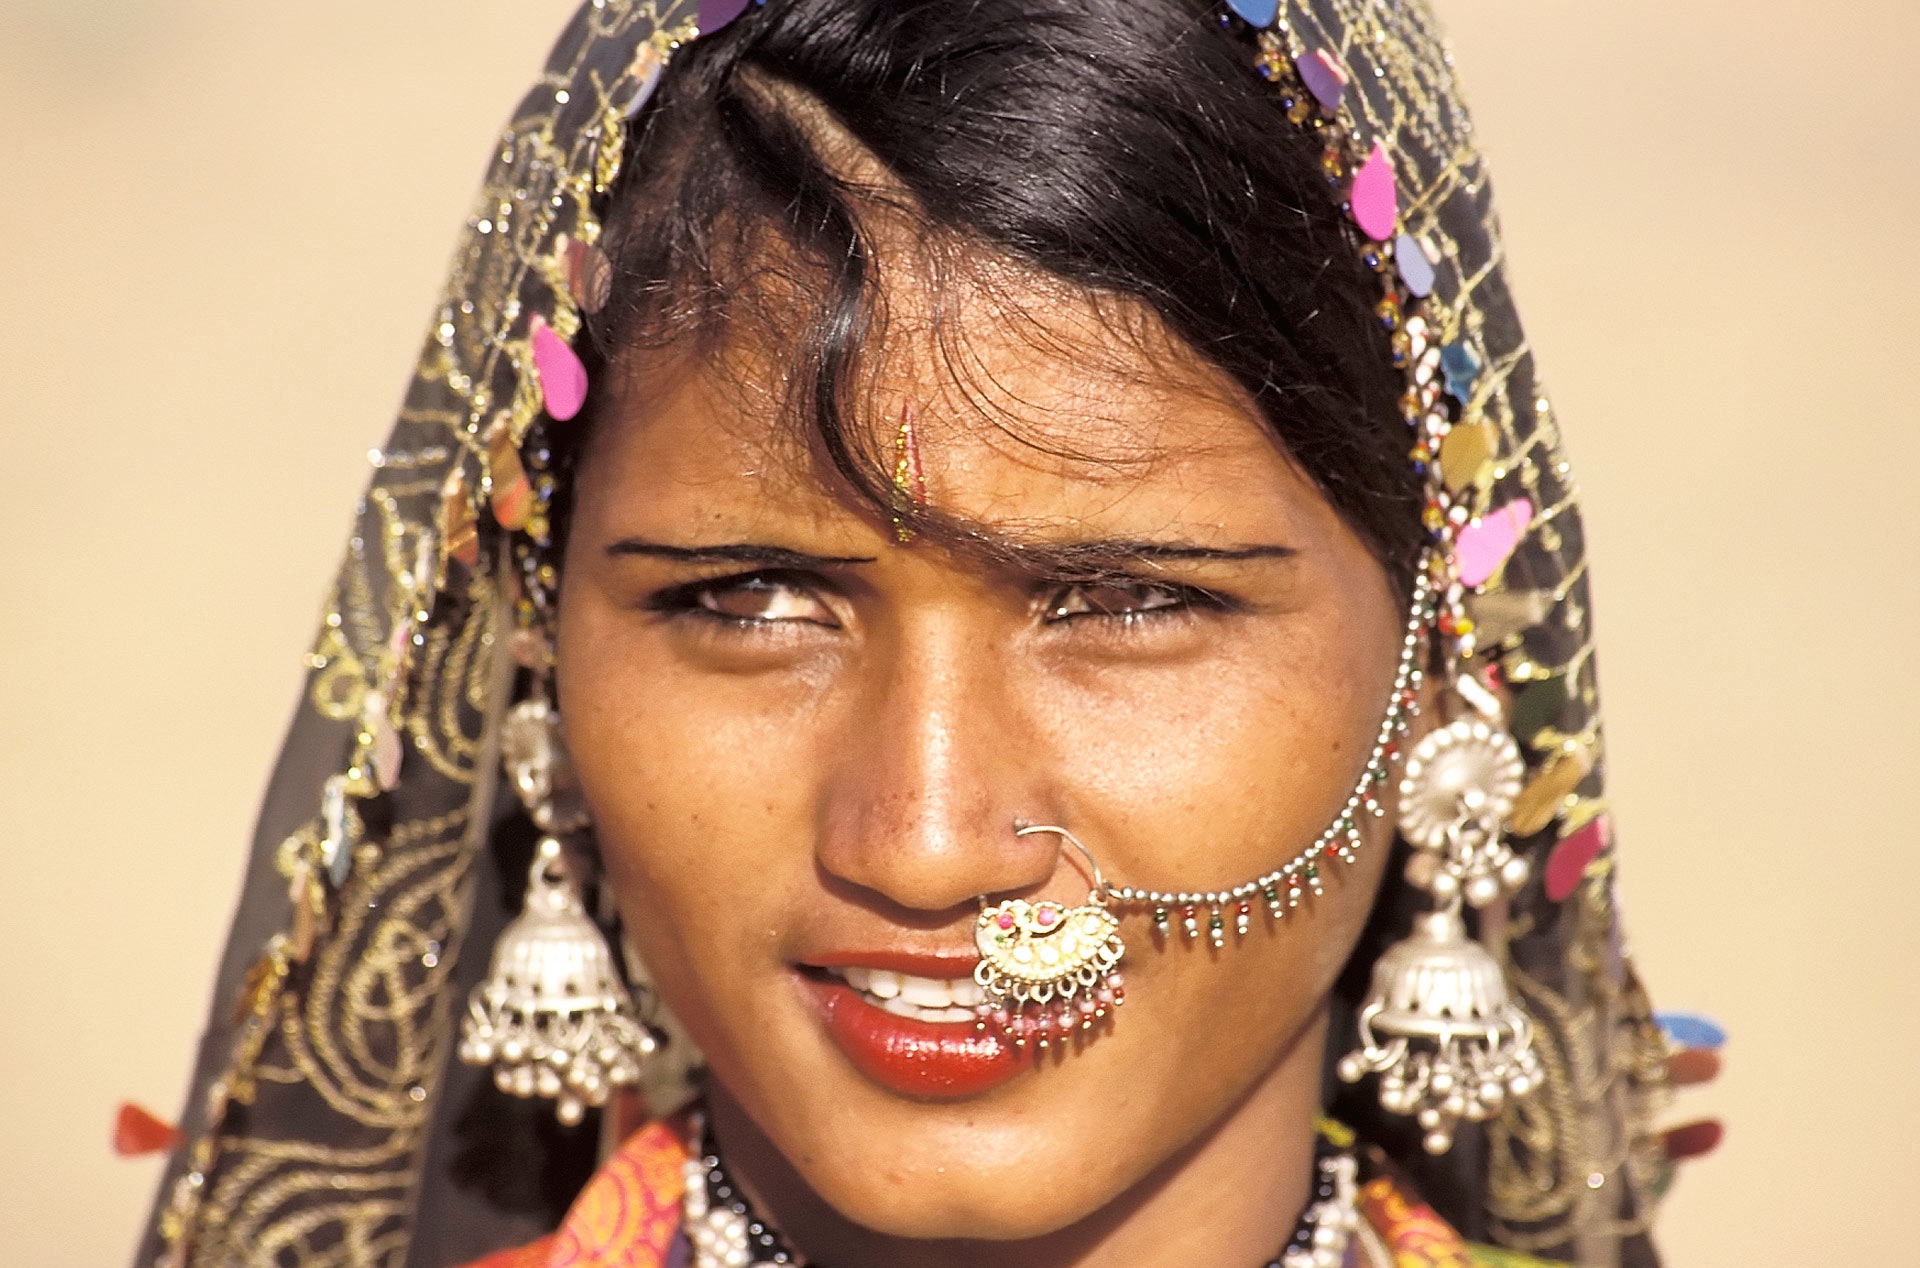 Woman wearing traditional Rajasthani jewellery and dress, Pushkar Camel Fair, Rajasthan, India